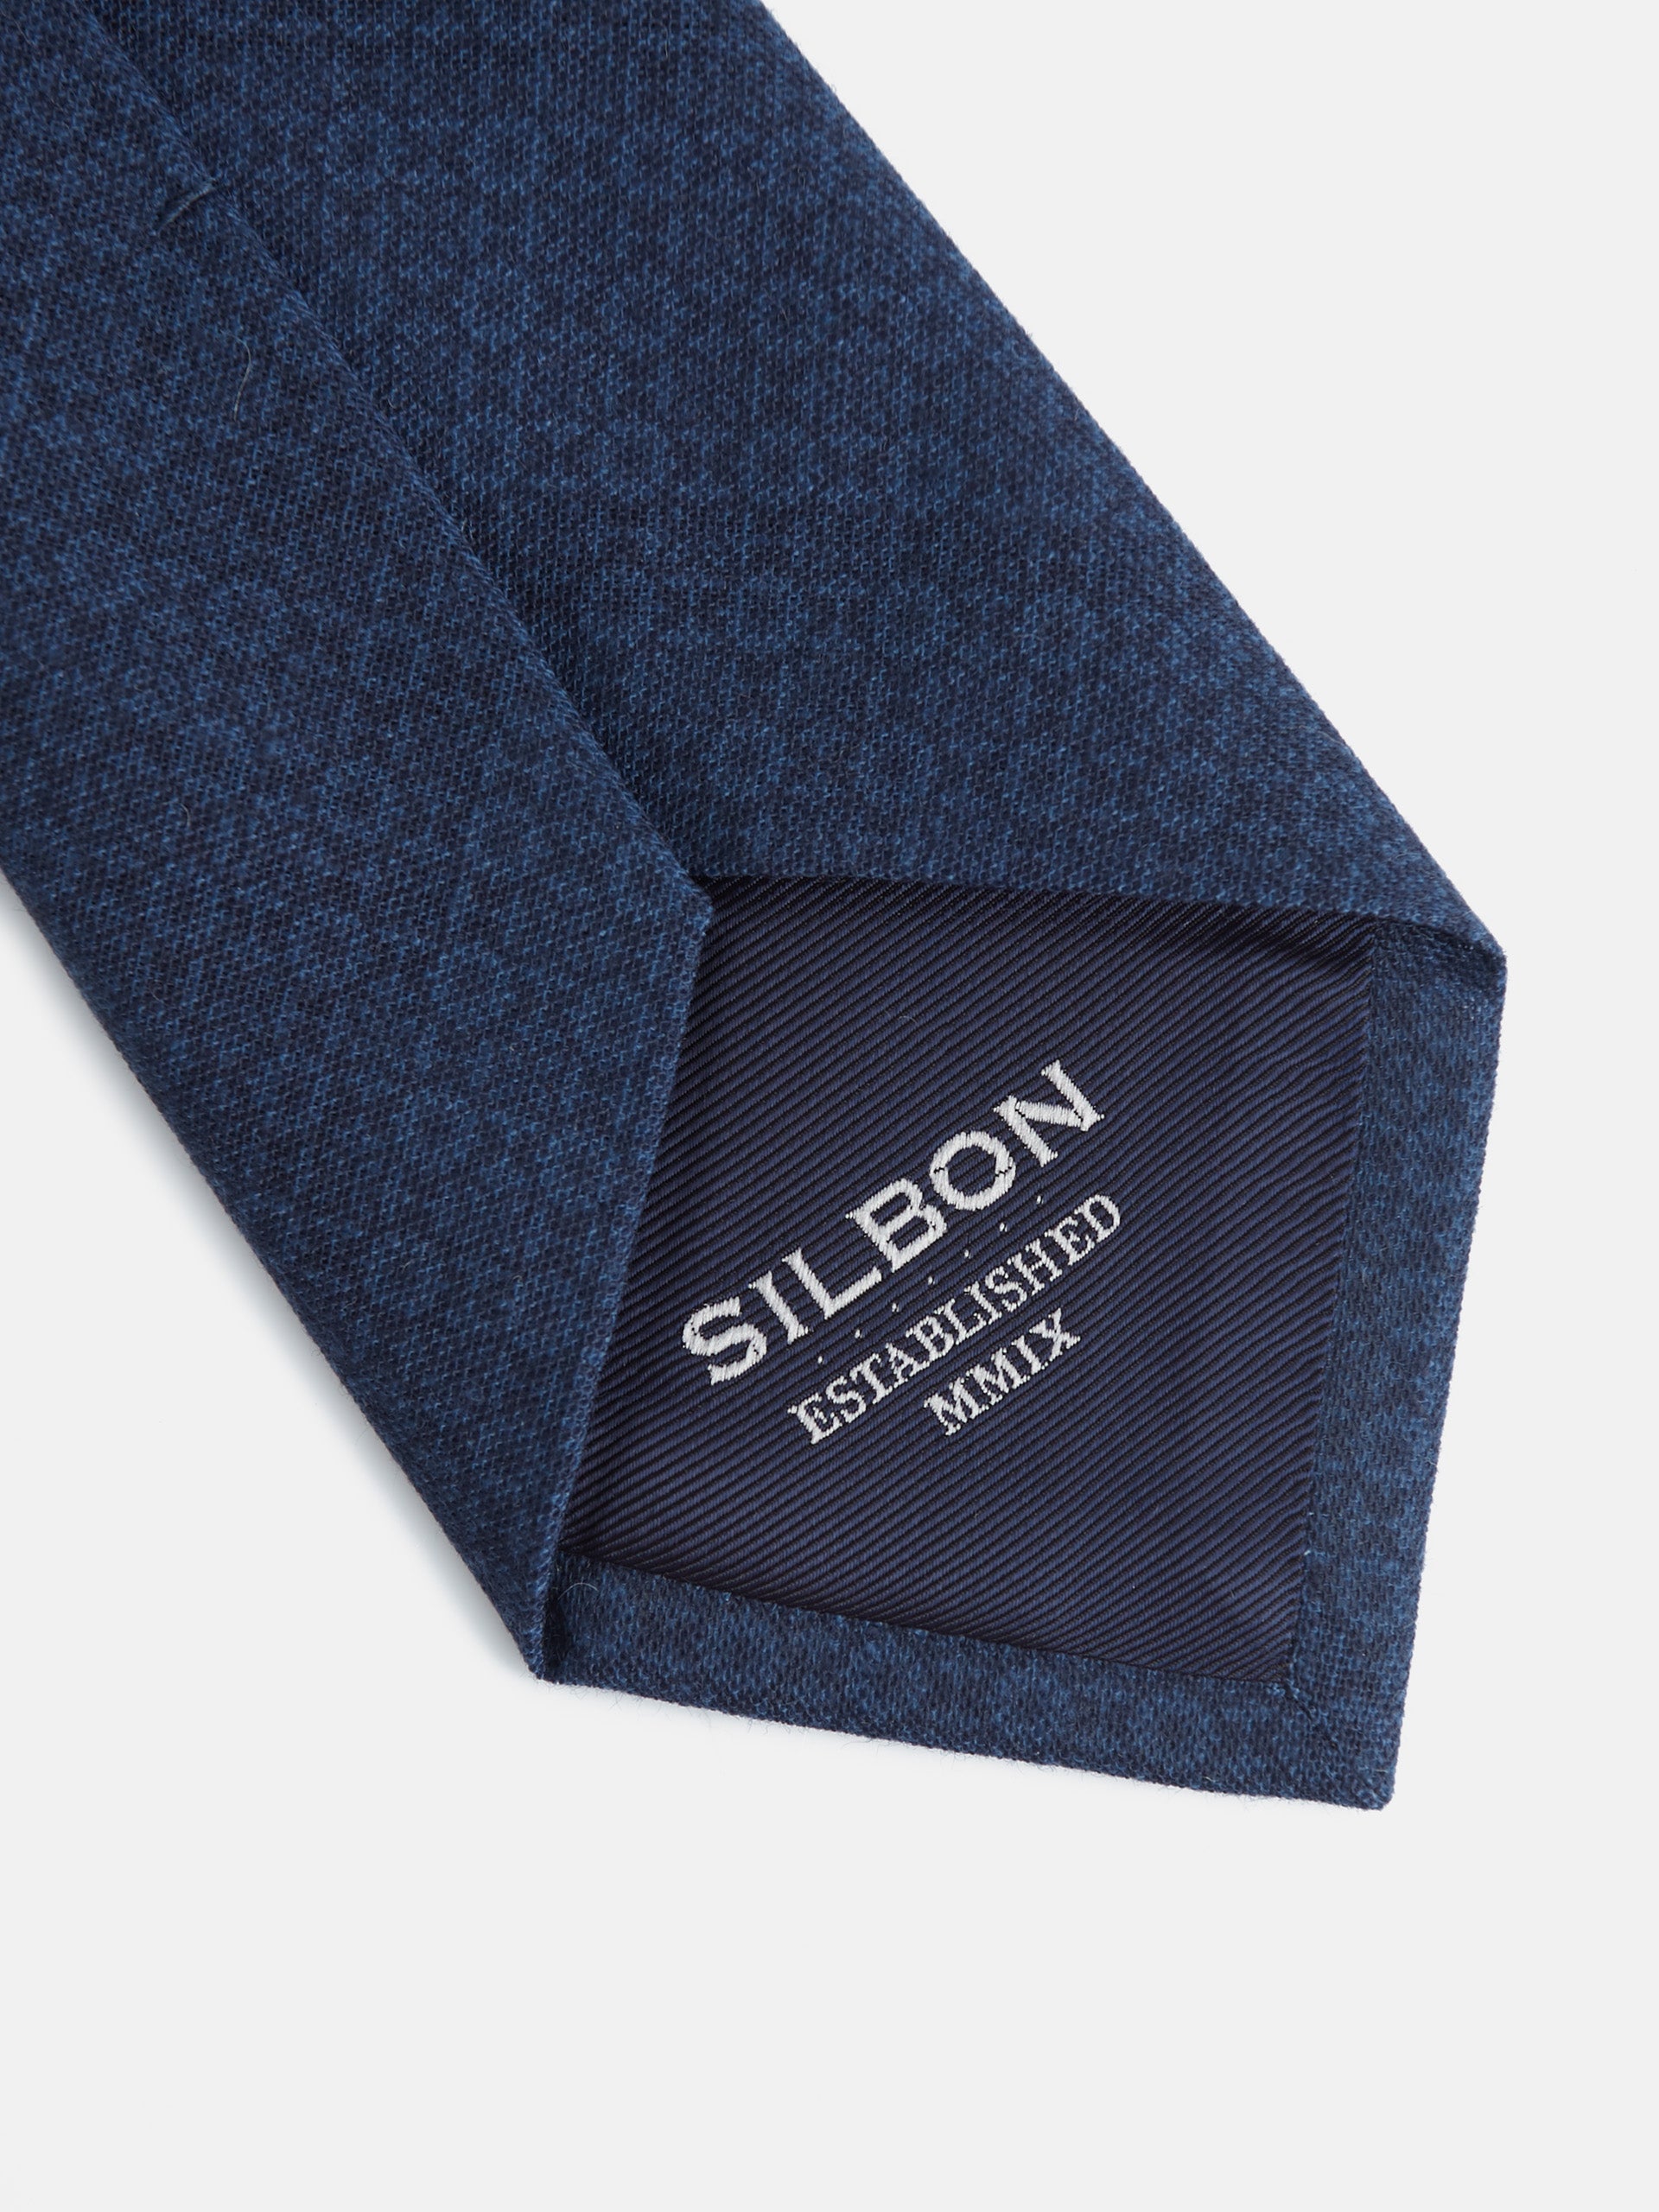 Cravate Asti à motifs bleus